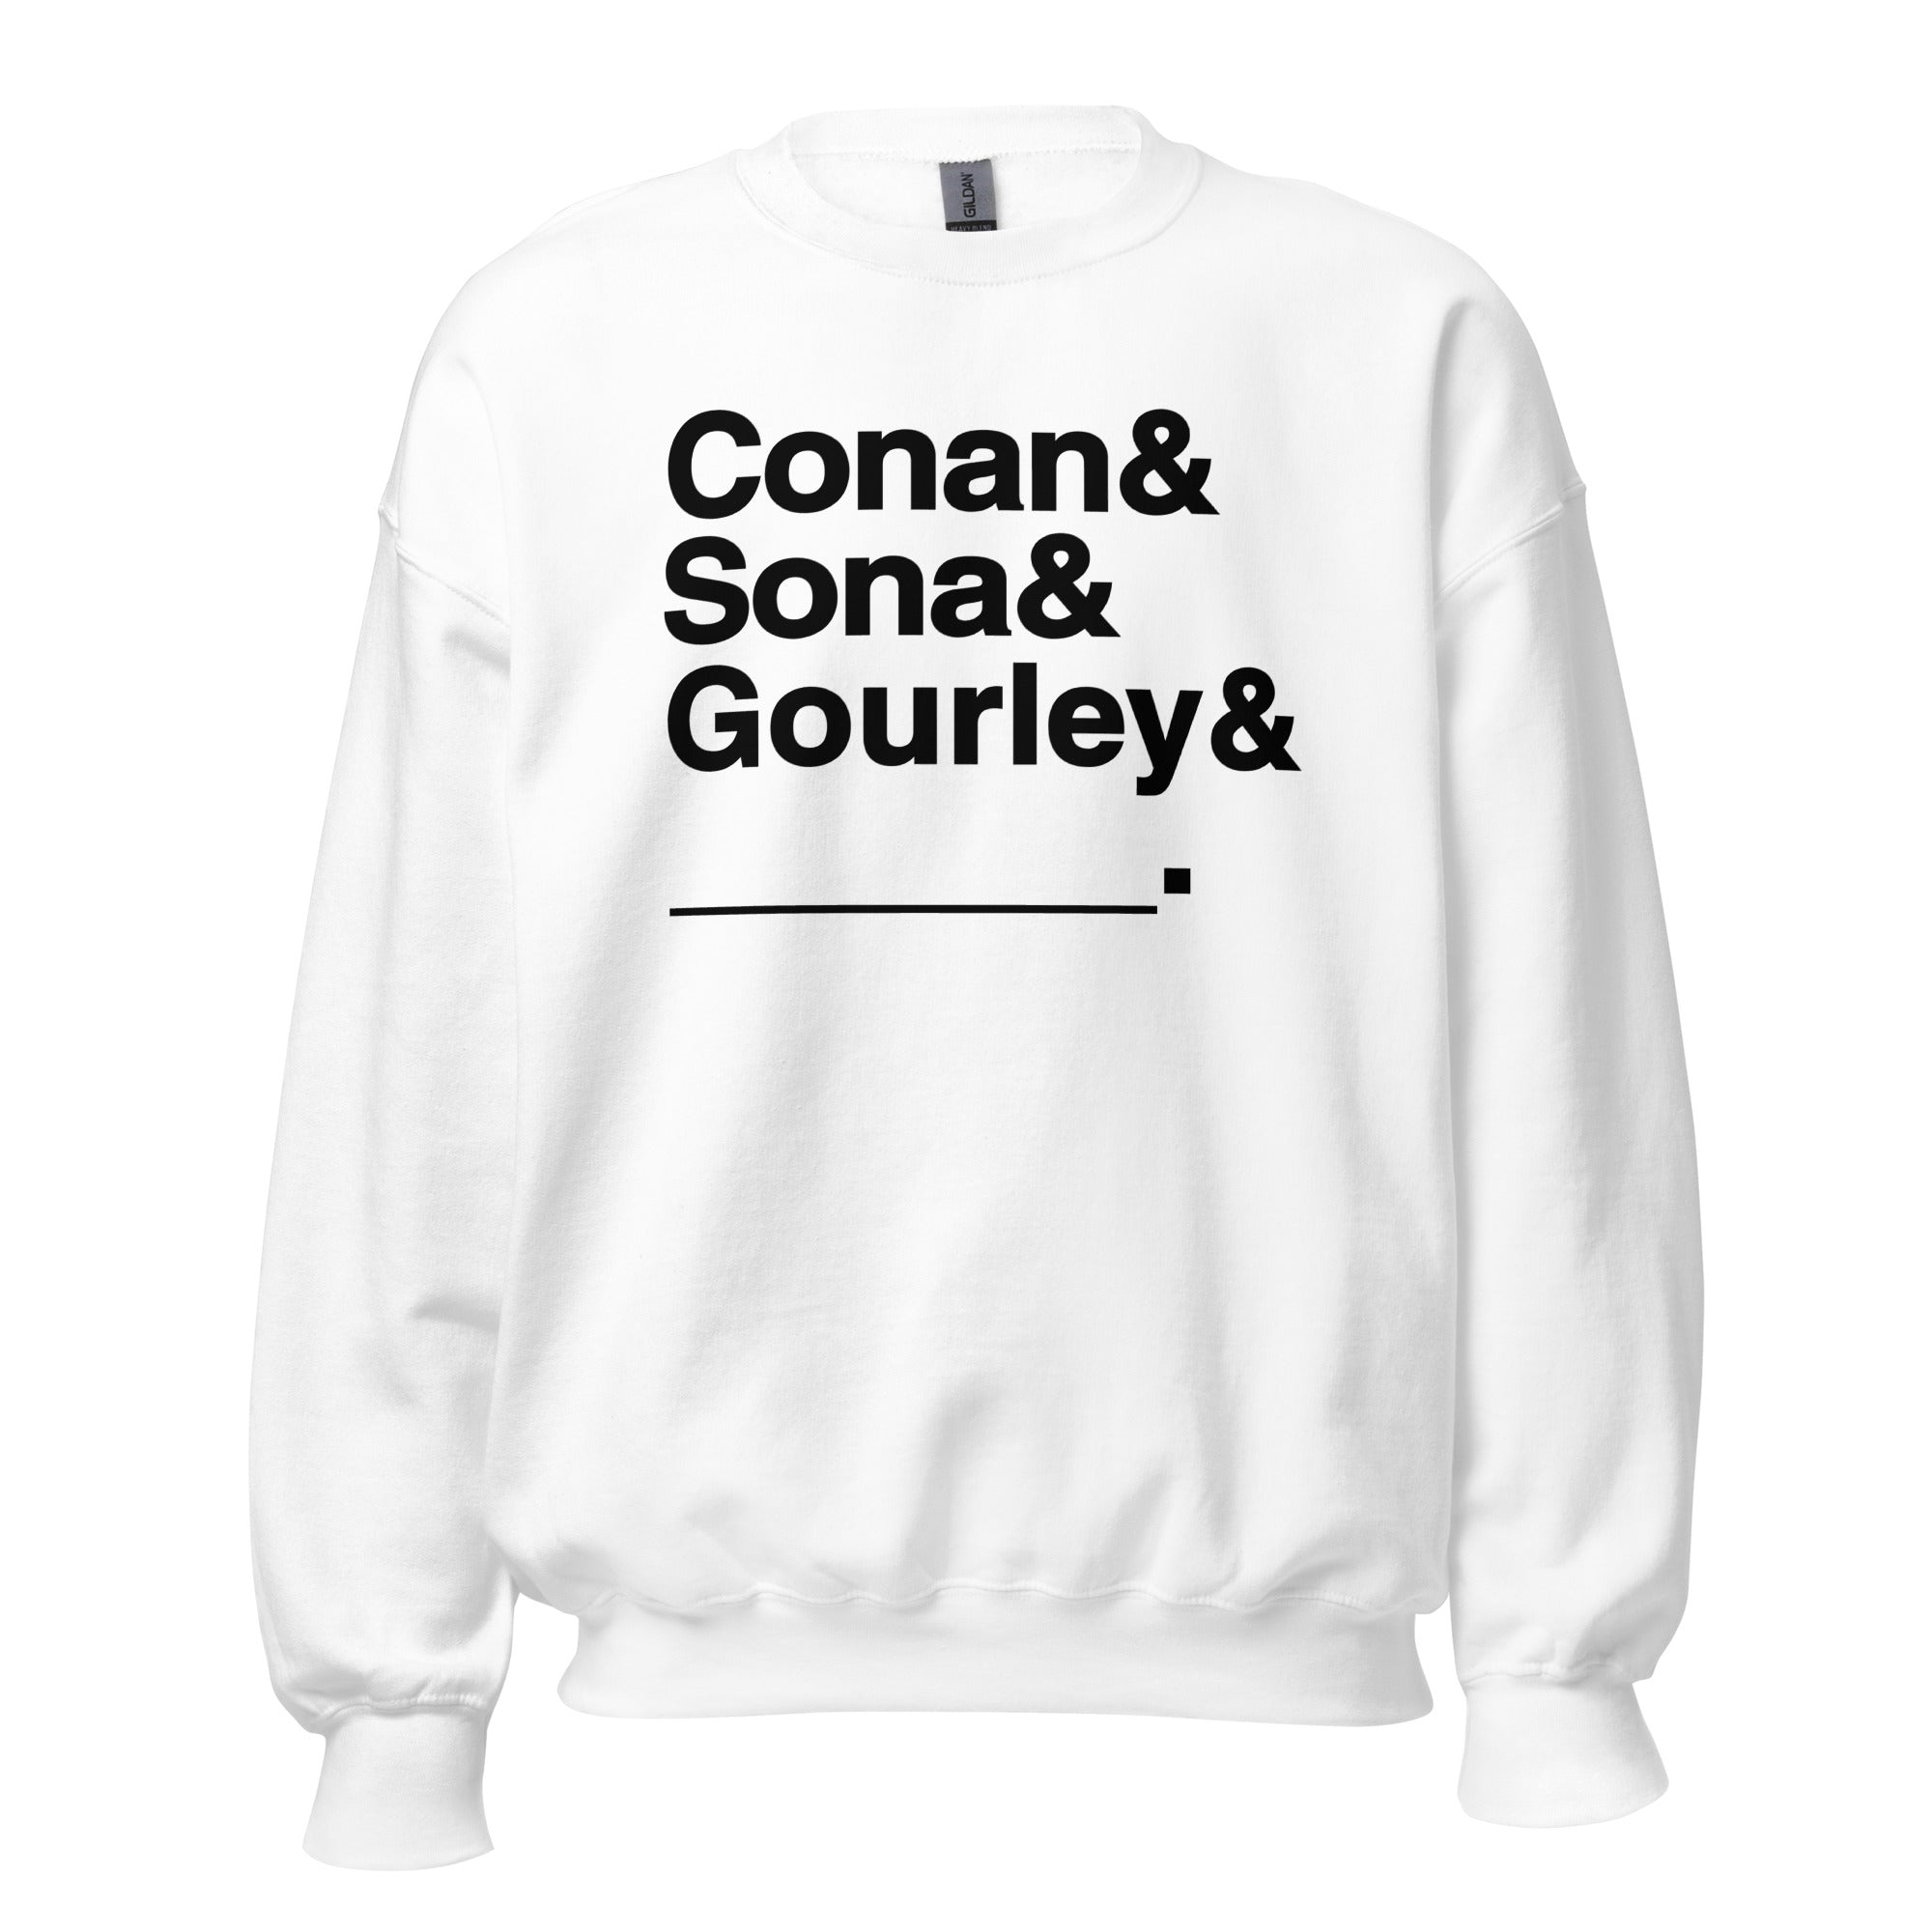 Conan O'Brien Needs A Friend: Conan & Sona & Gourley & You Sweatshirt (White/Blue)